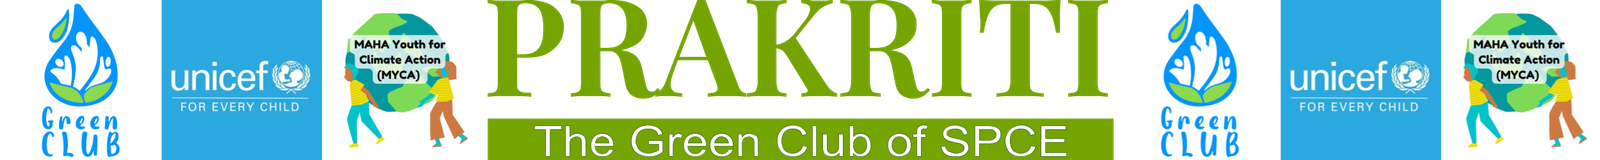 PRAKRITI - The Green Club of SPCE